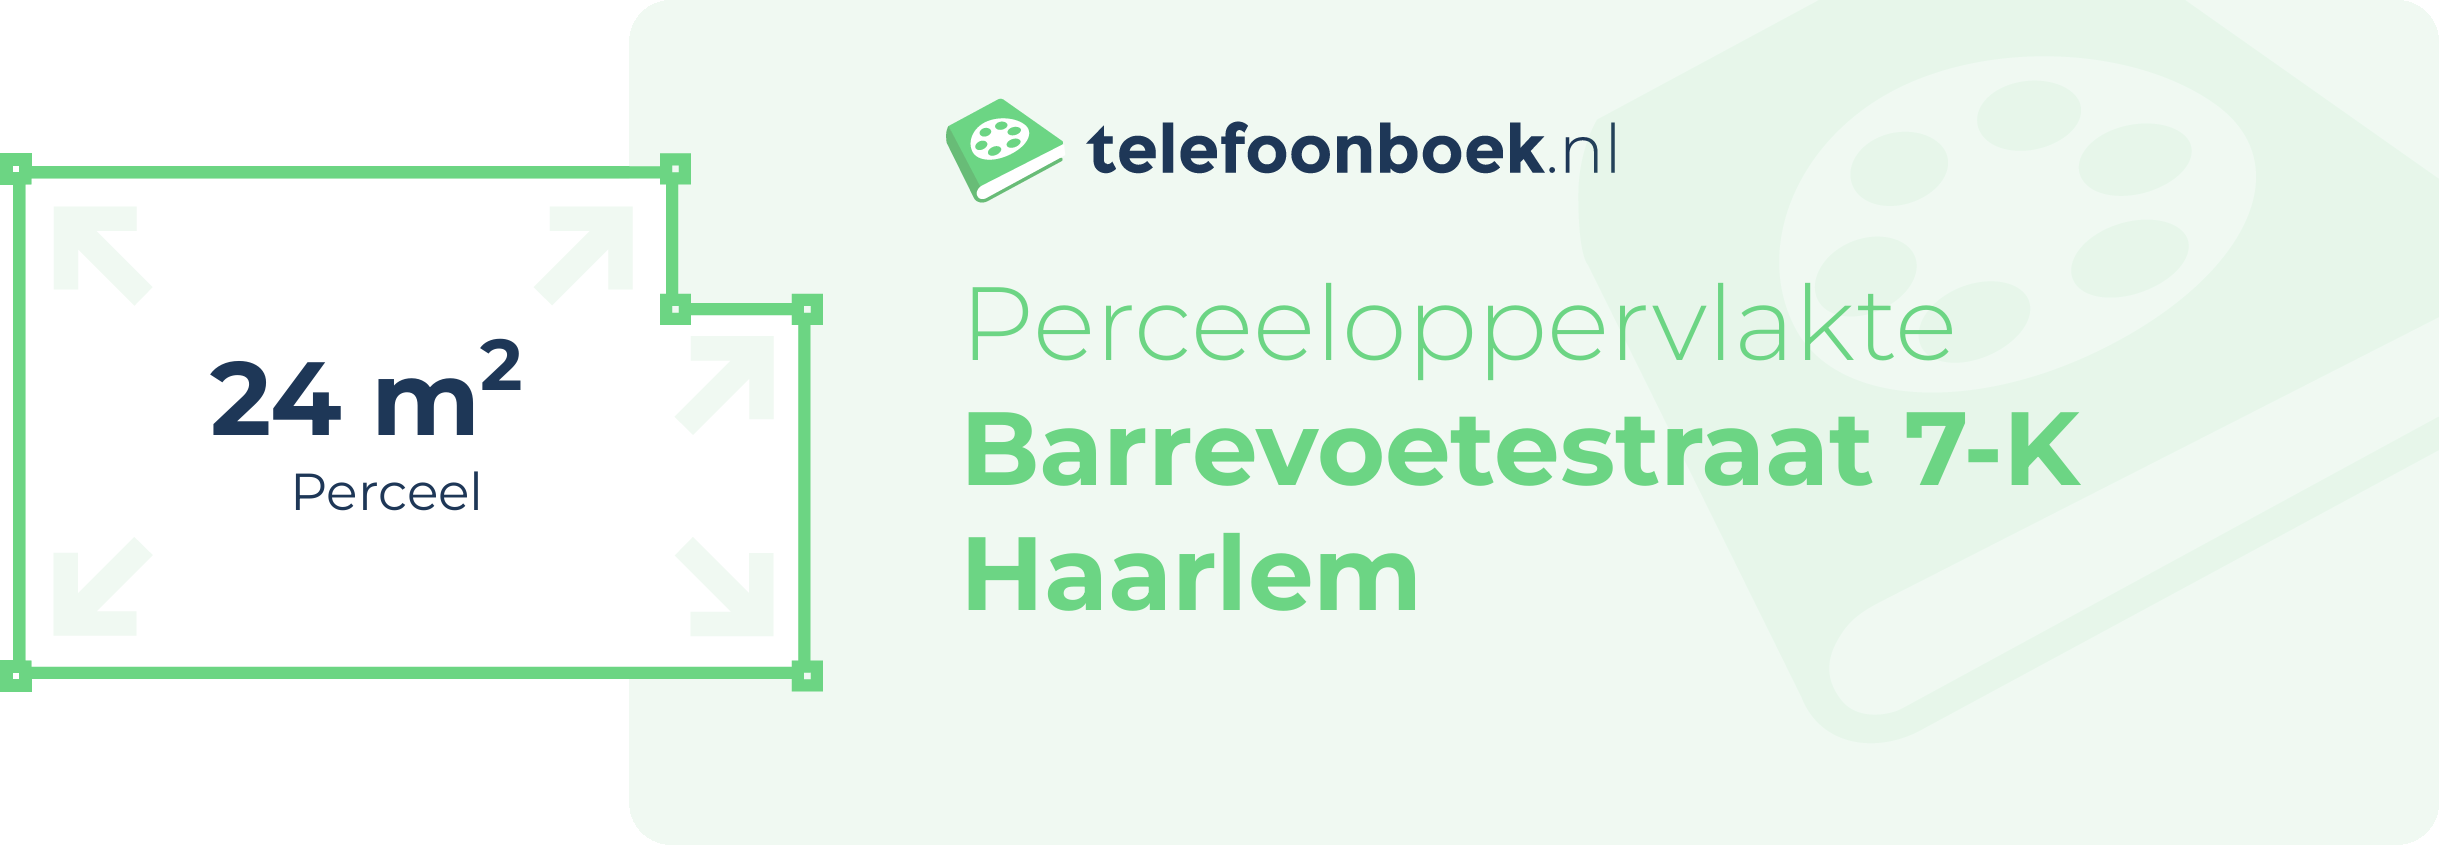 Perceeloppervlakte Barrevoetestraat 7-K Haarlem